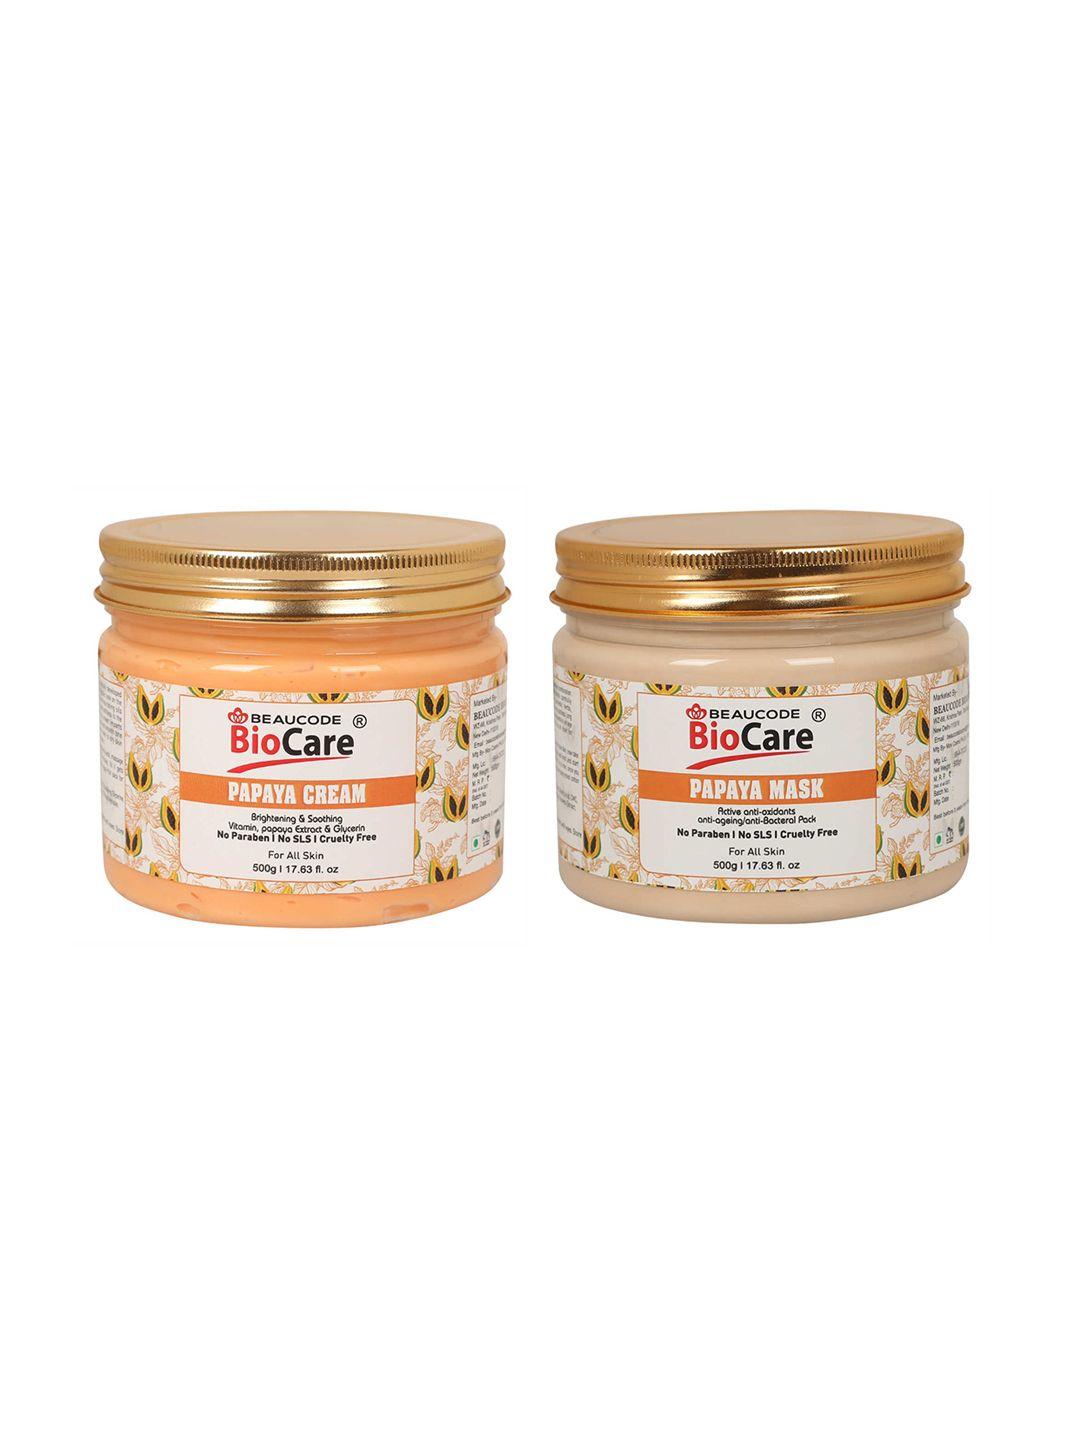 beaucode biocare set of papaya face cream & mask - 500 g each